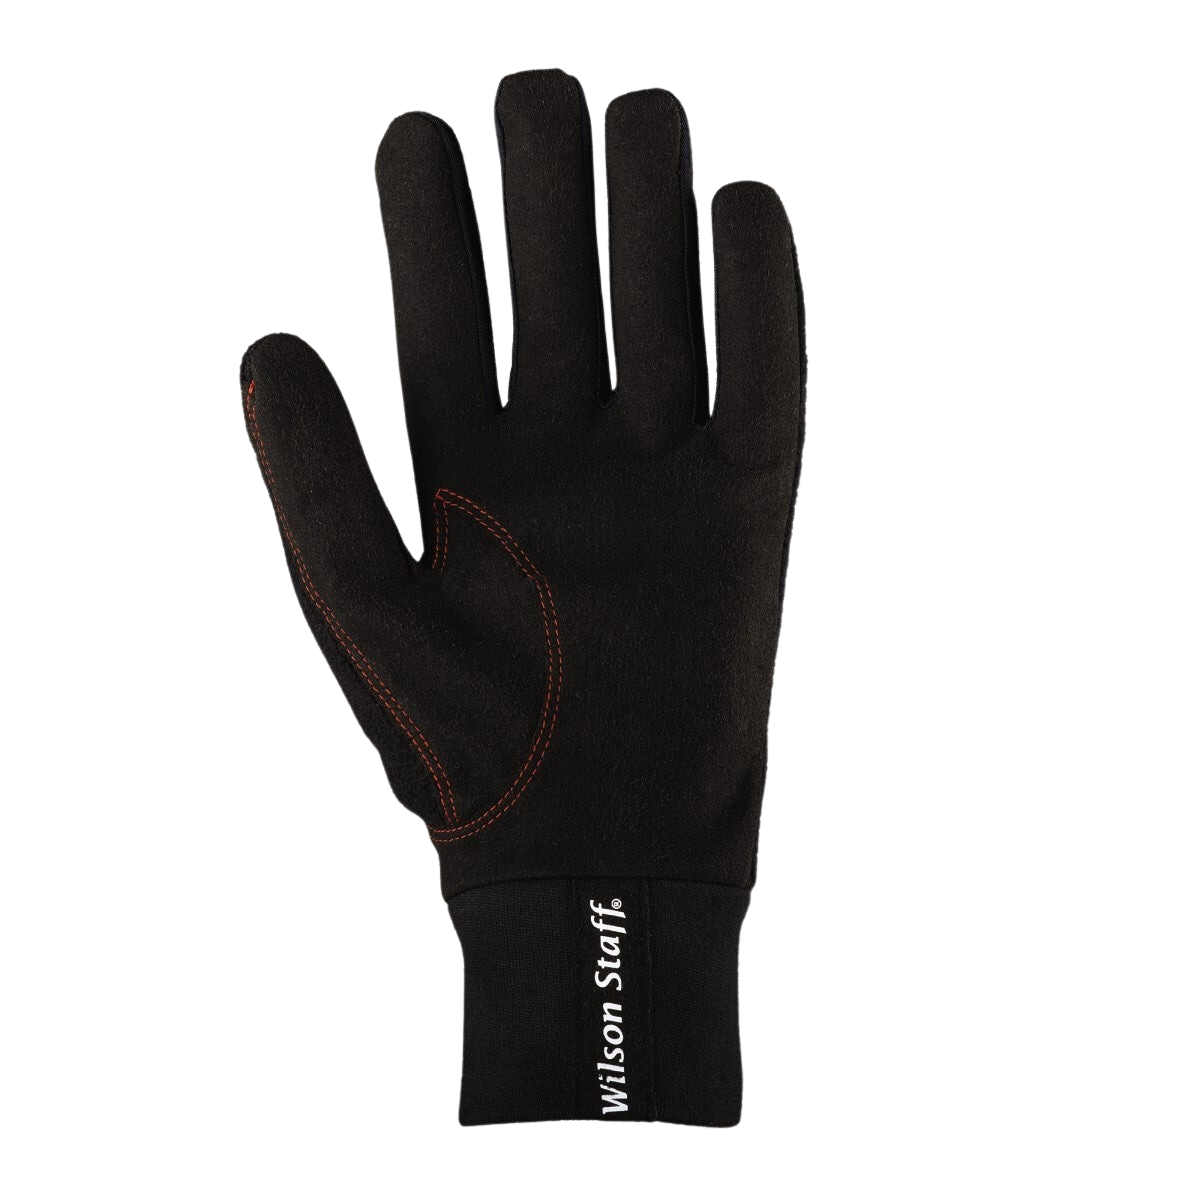 Wilson Sports Men's Winter Gloves